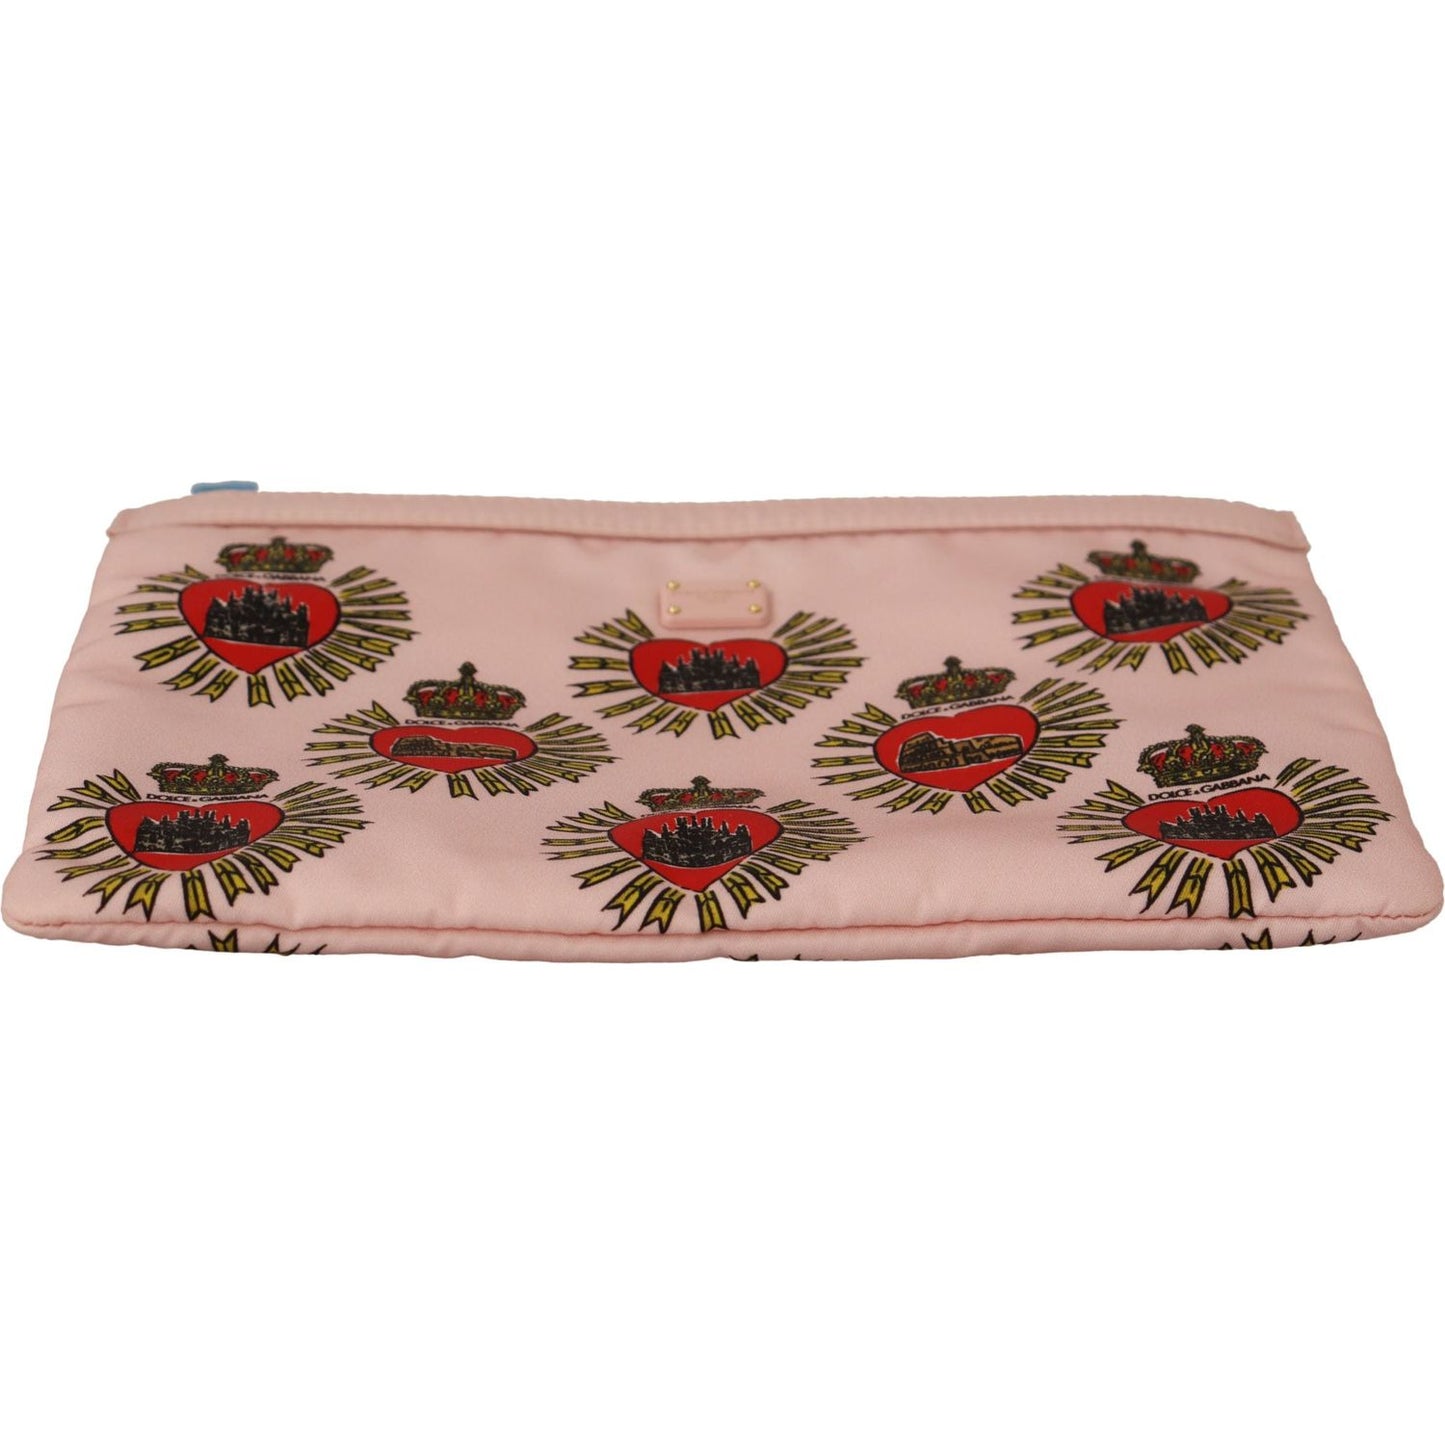 Dolce & Gabbana Elegant Pink Heart Clutch Wallet clutch-pink-d-g-logo-devotion-heart-nylon-pouch-wallet WOMAN WALLETS IMG_2616-scaled-5e3dcbd5-db5.jpg